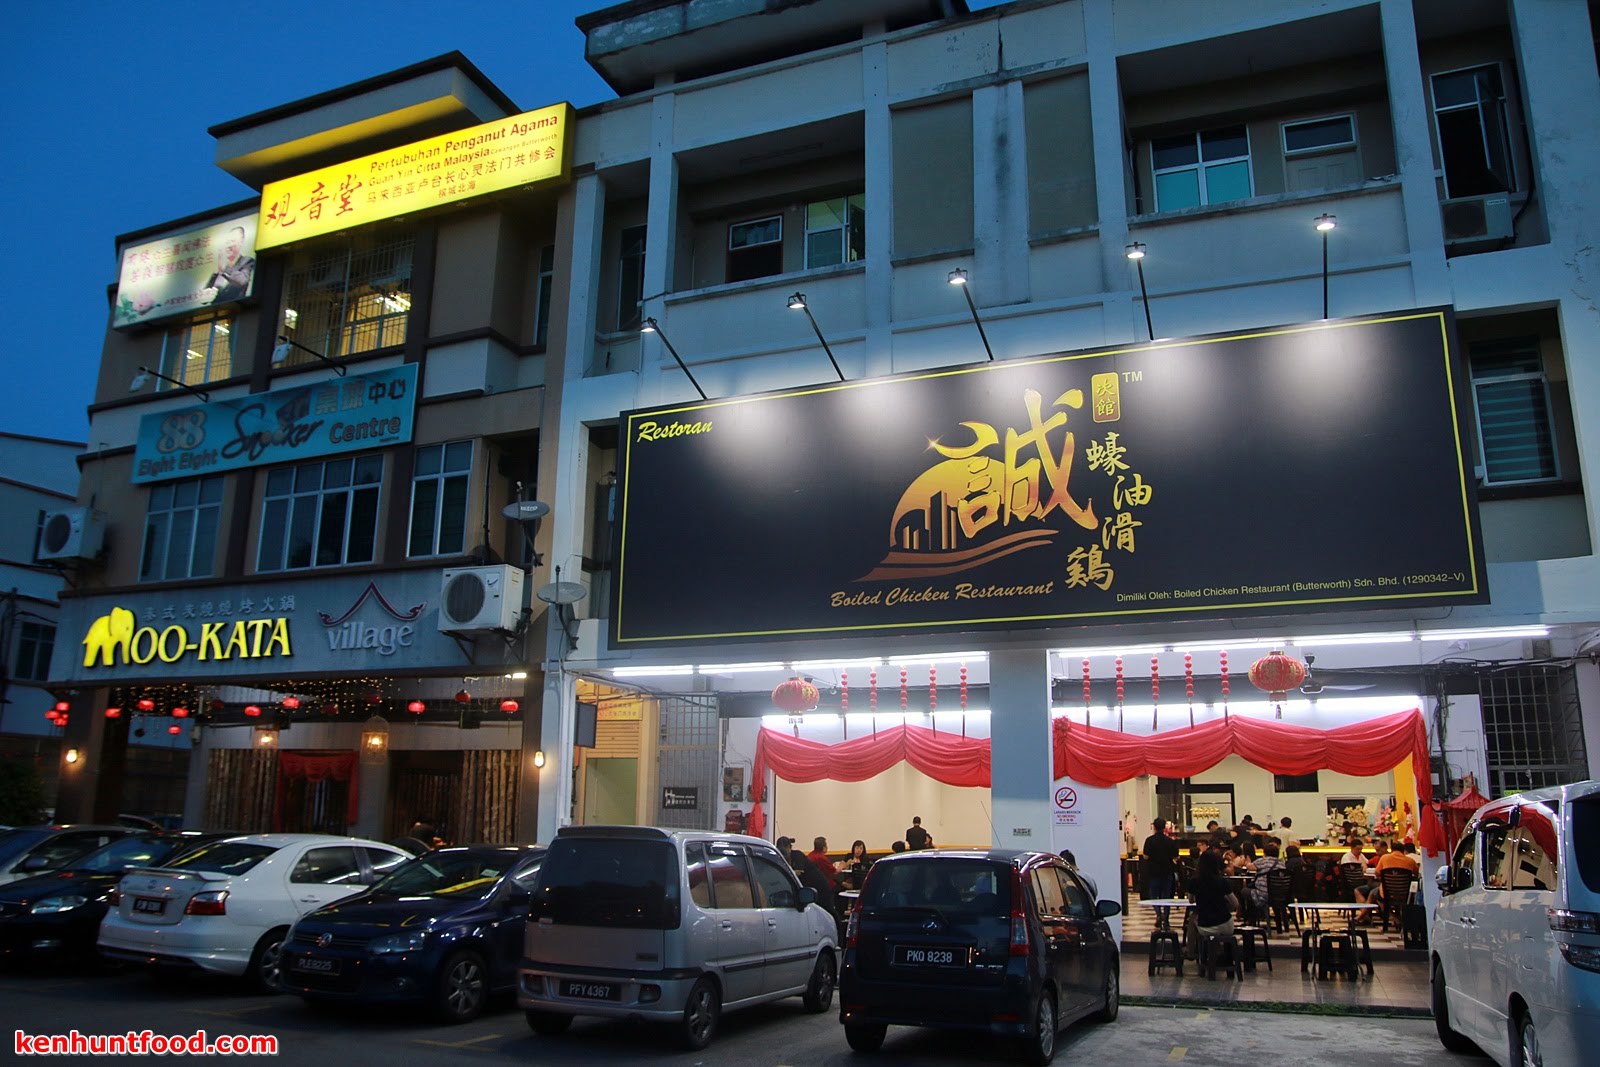 Ken Hunts Food: Boiled Chicken Restaurant (诚蚝油滑鸡) @ Butterworth, Penang.